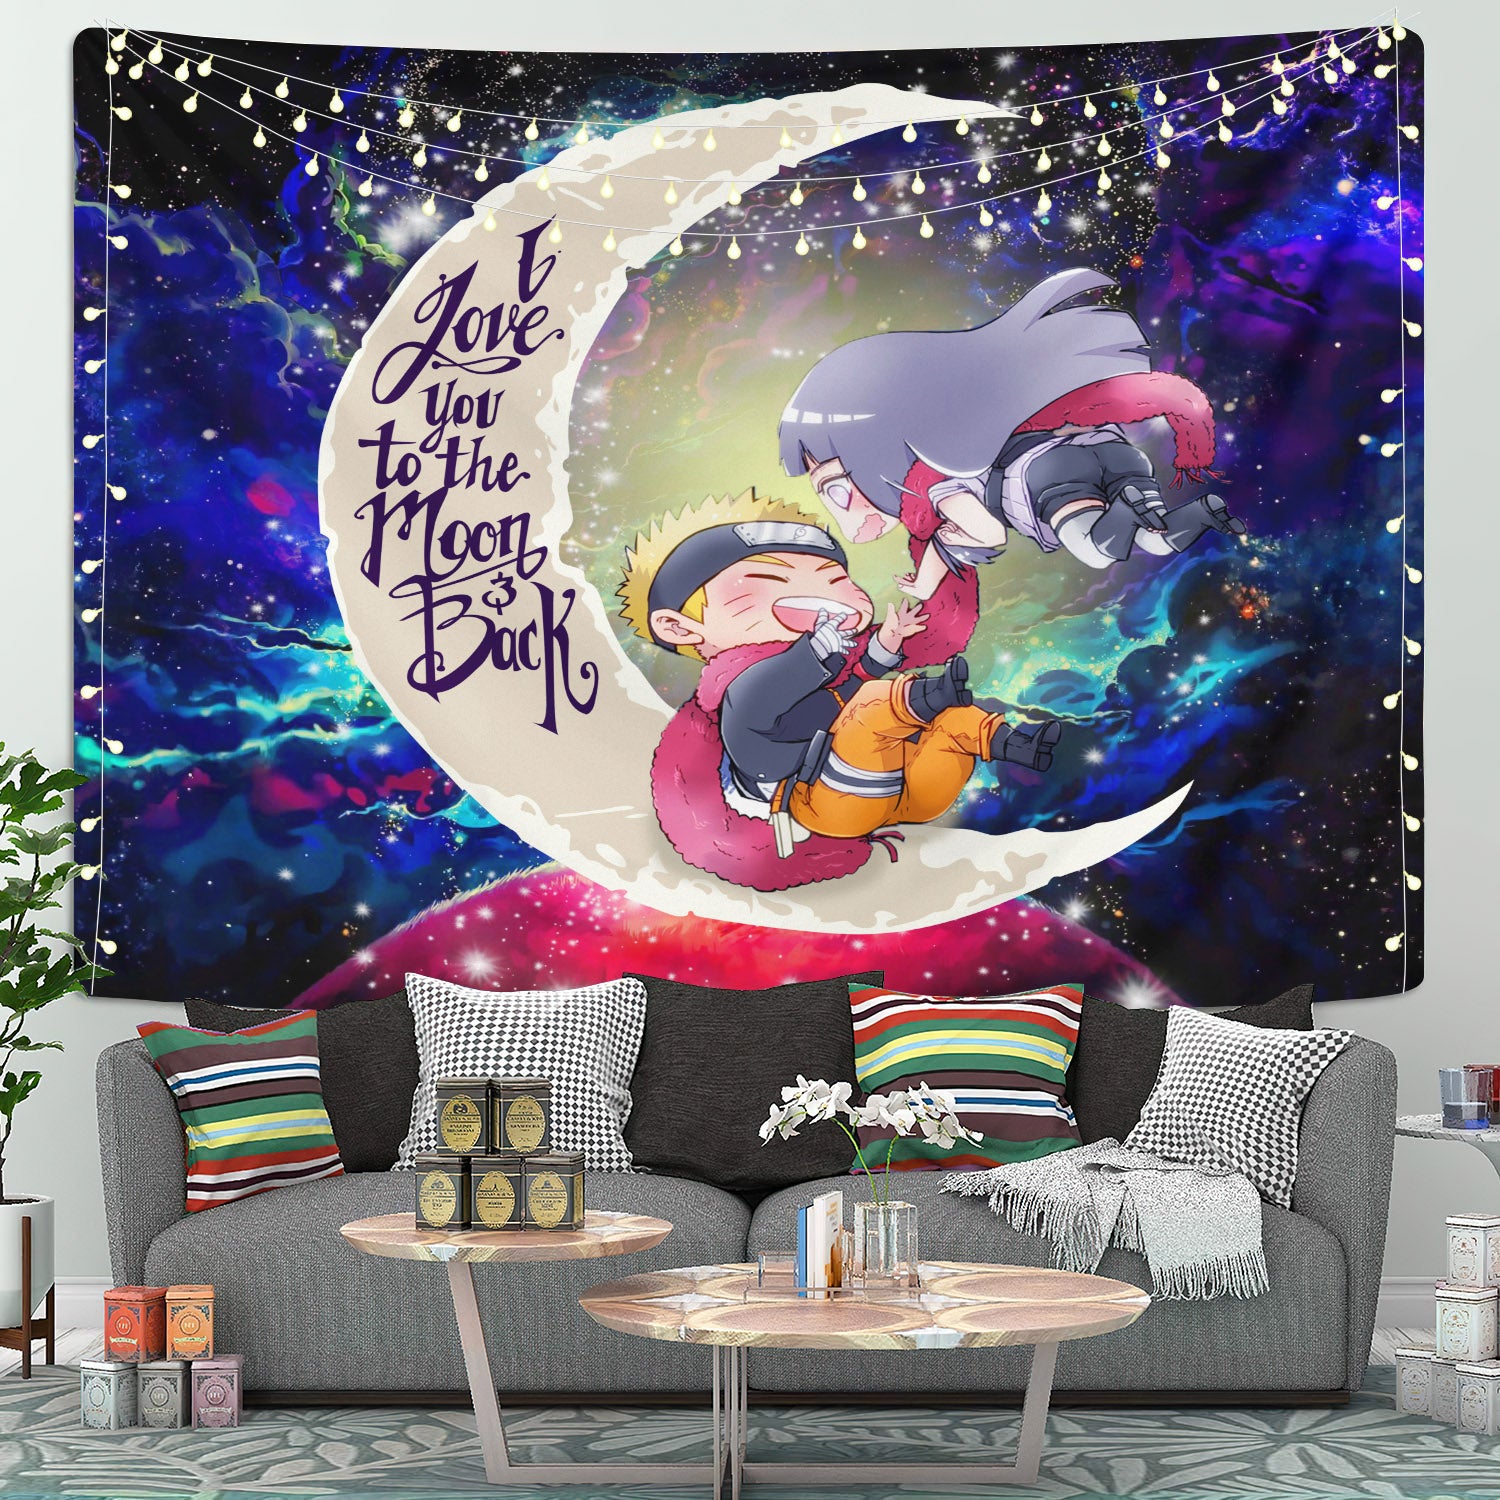 Naruto Hinata Couple Moon And Back Galaxy Tapestry Room Decor